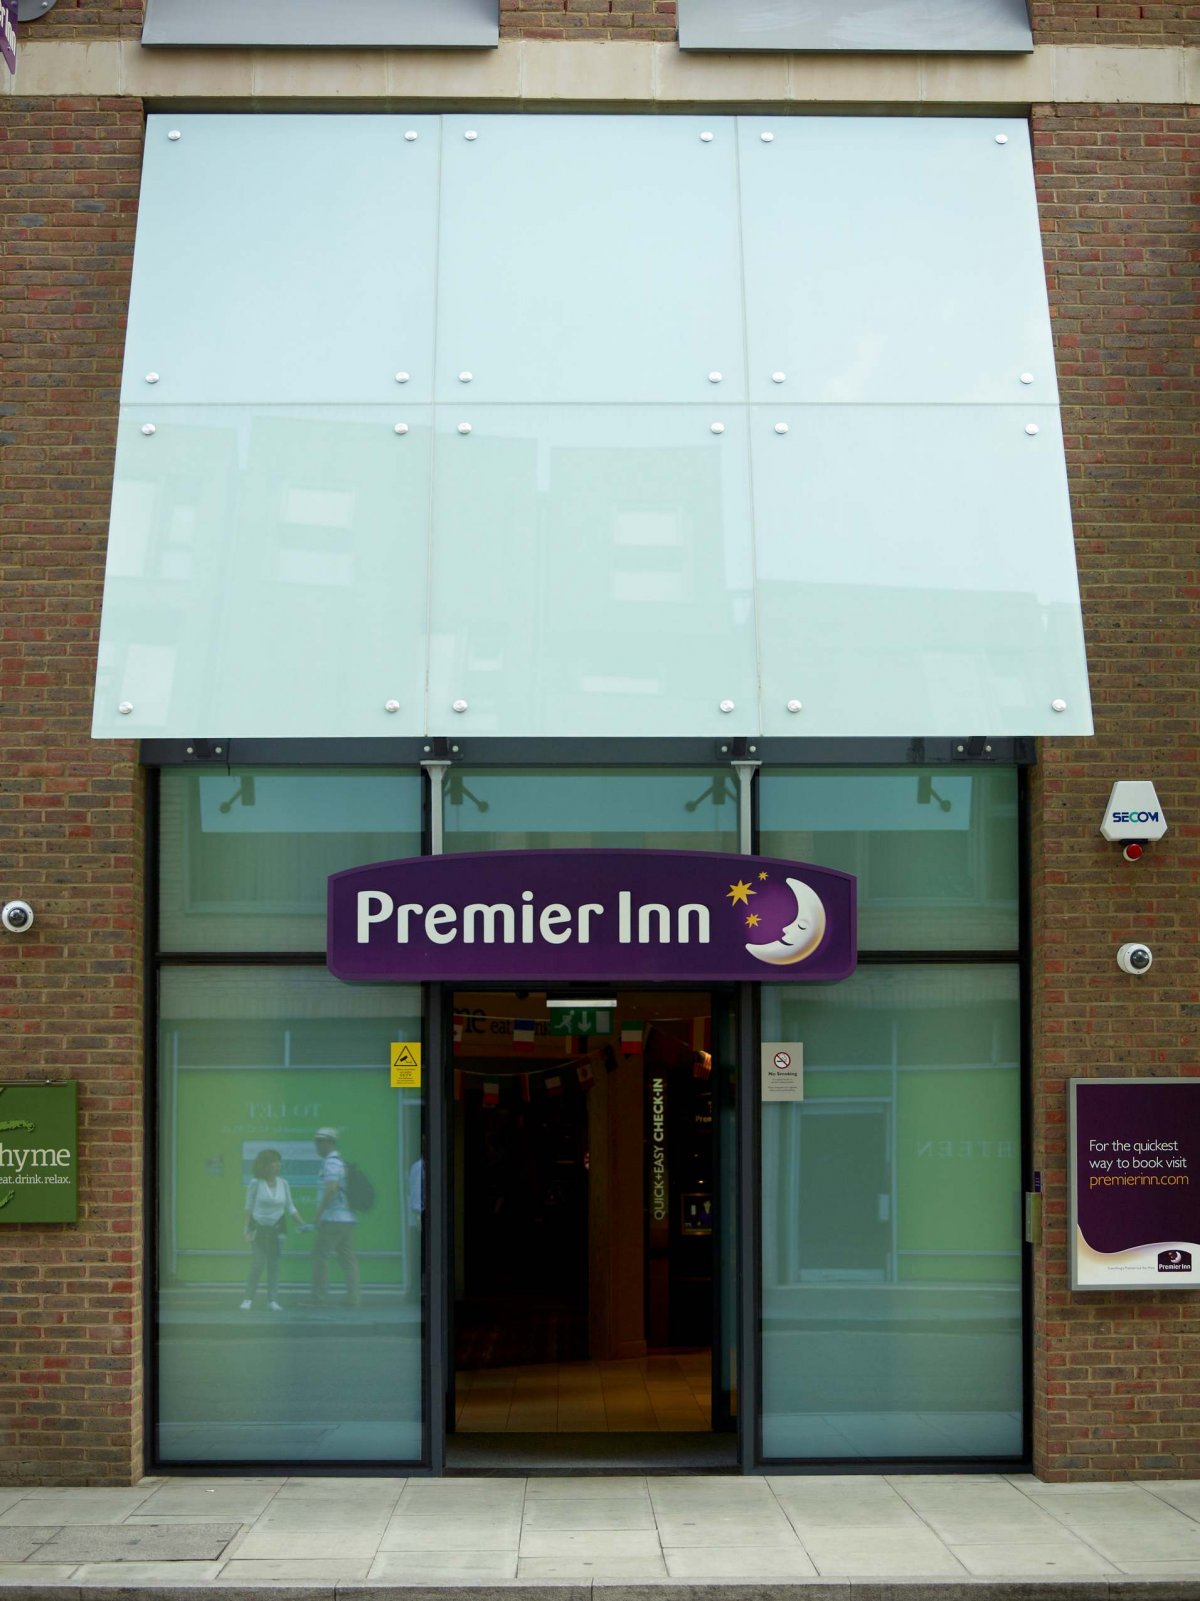 Premier Inn, Lavington St, London